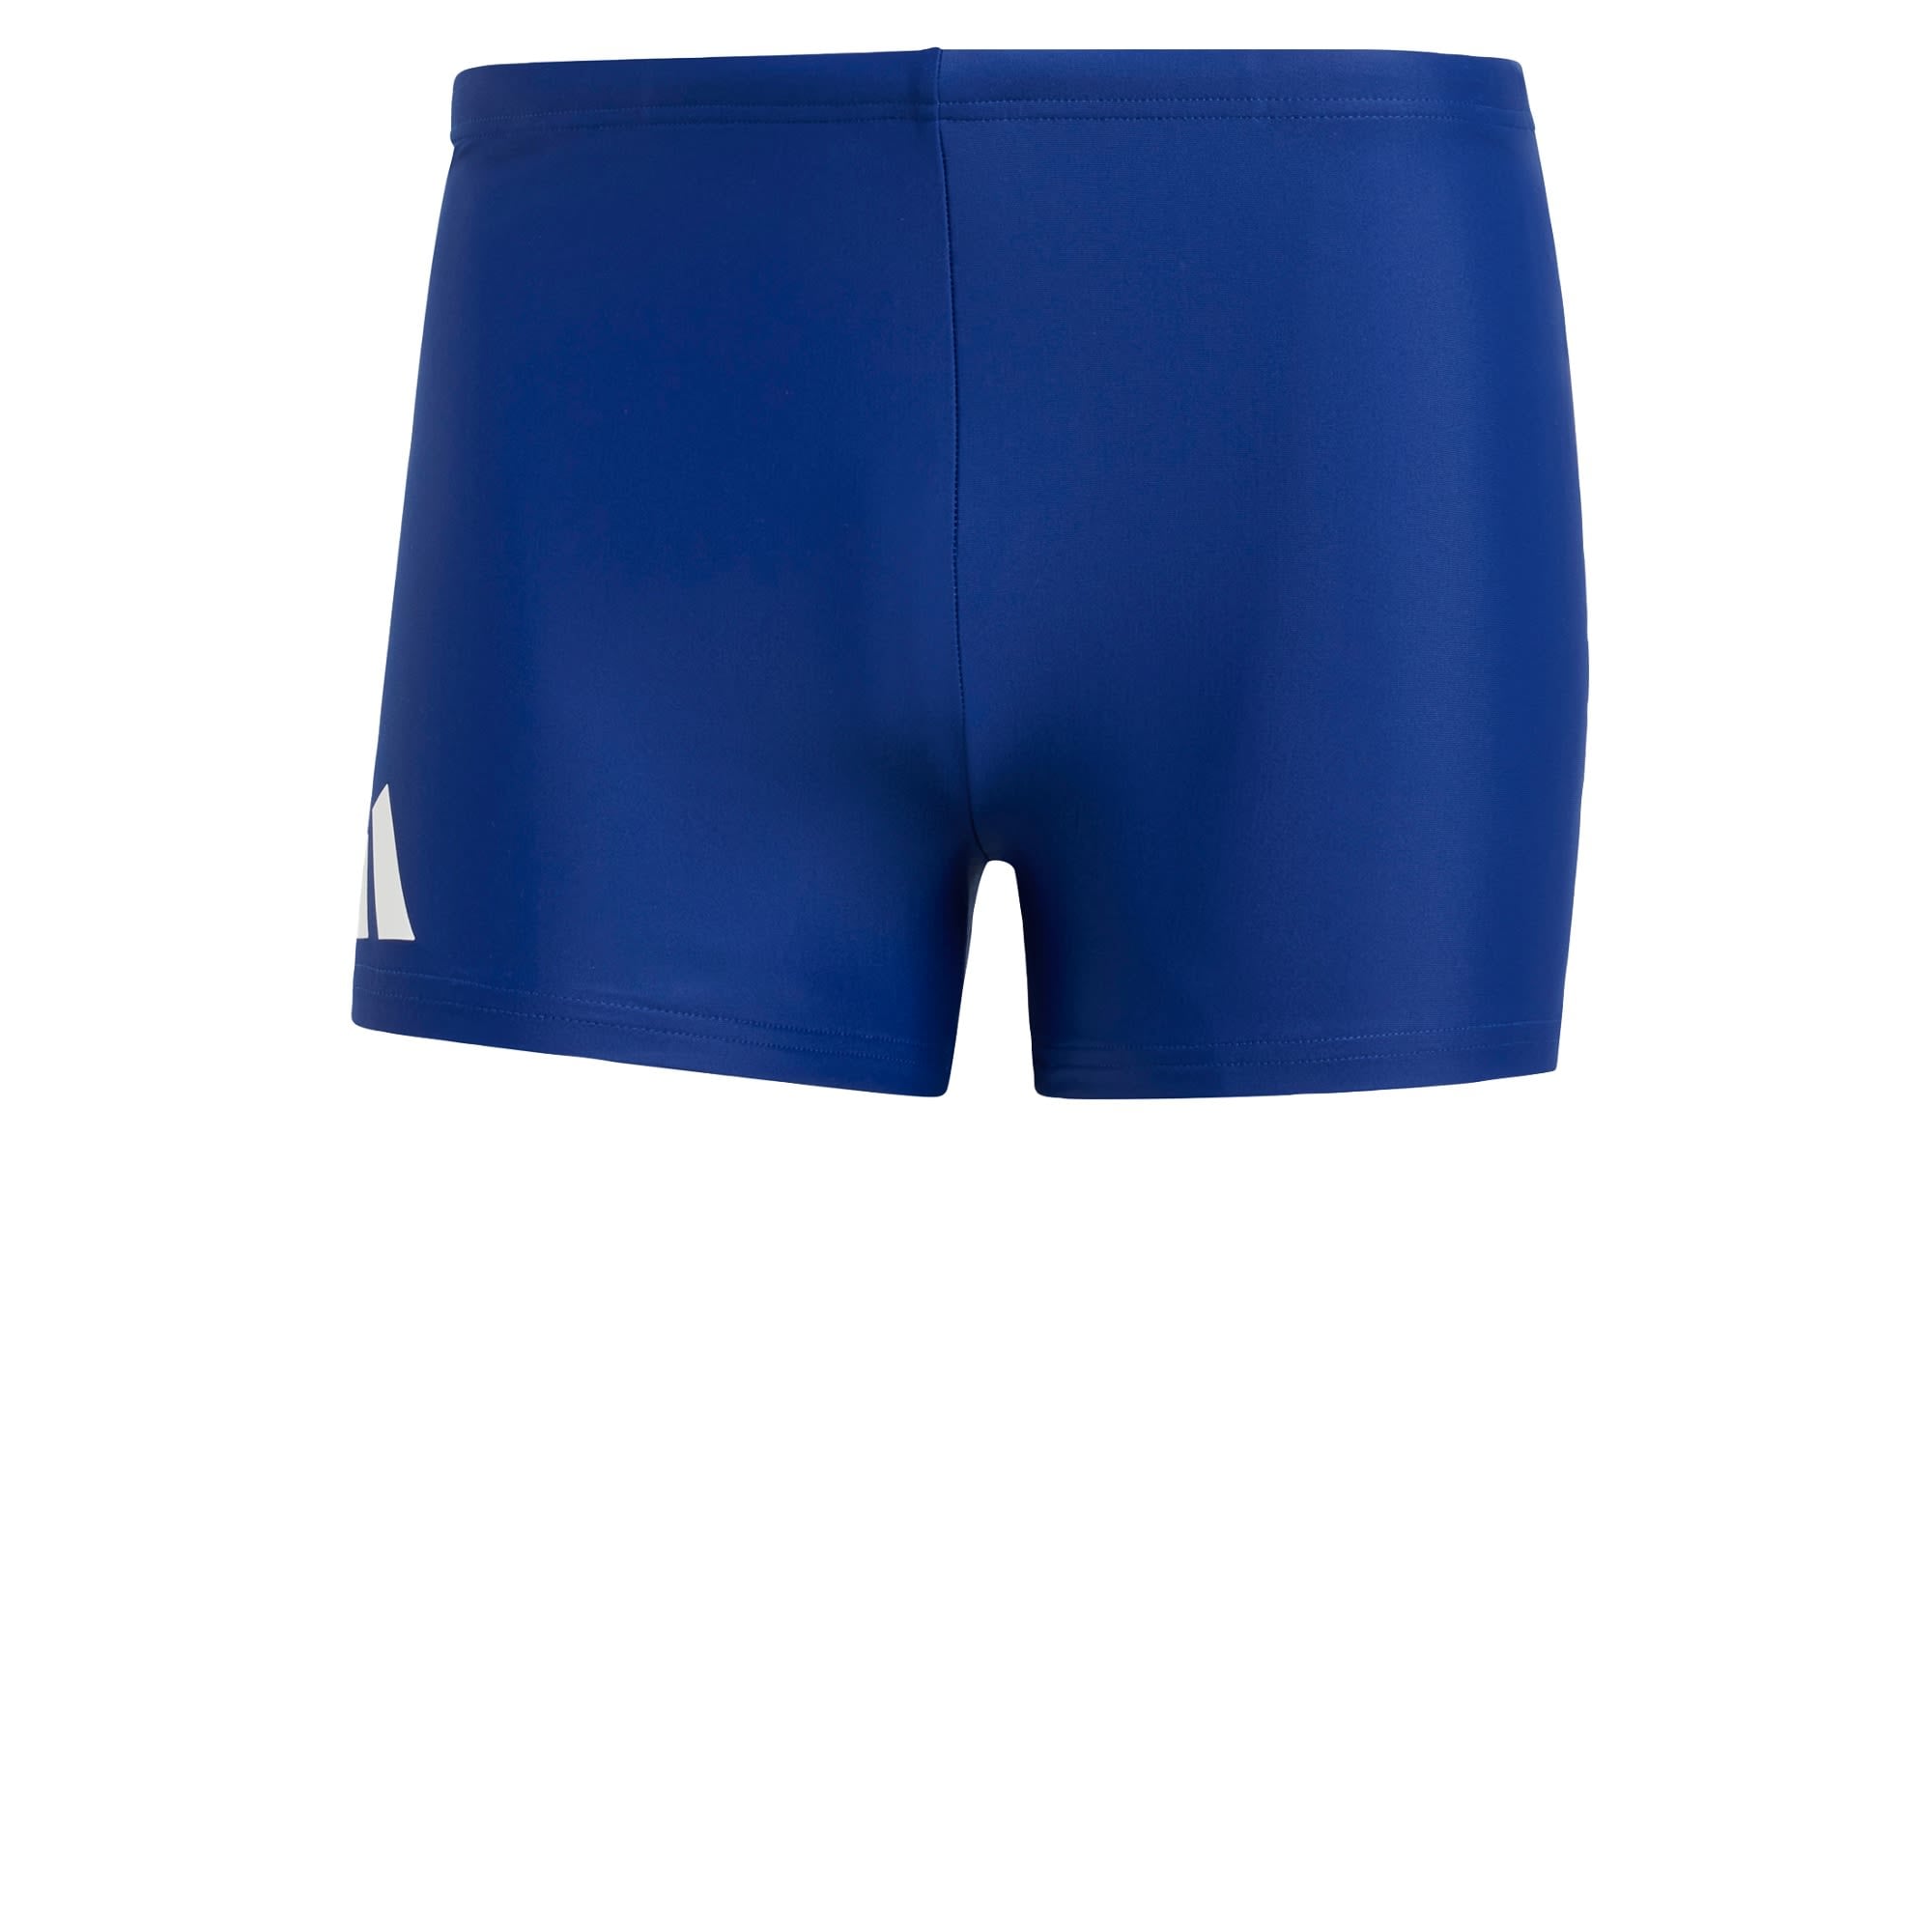 ADIDAS PERFORMANCE Športne kopalne hlače  temno modra / bela